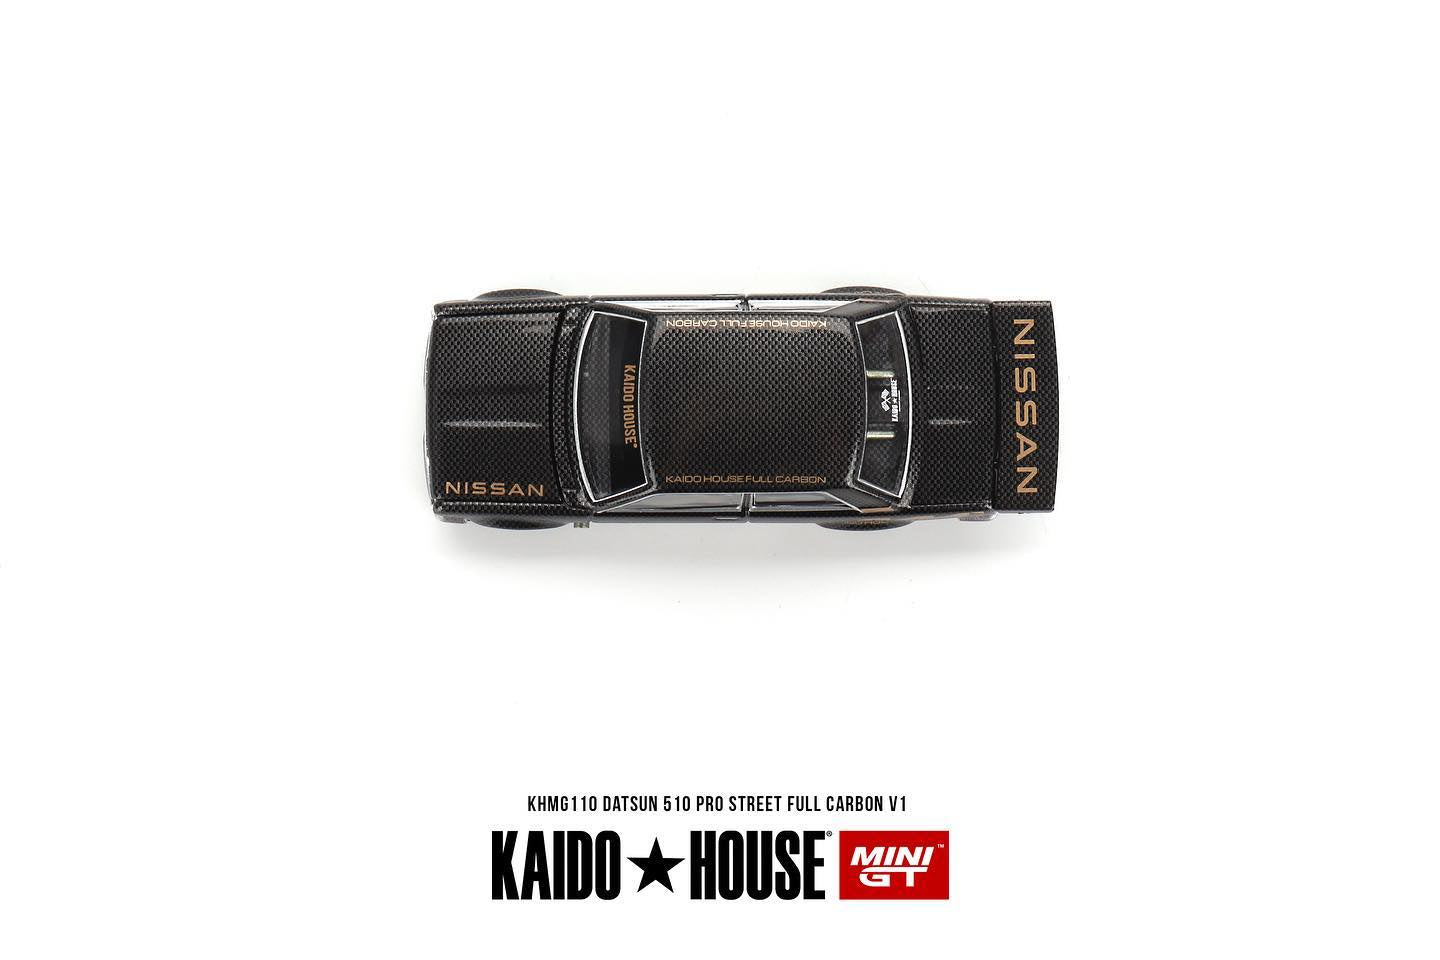 Mini GT x Kaido House Datsun 510 Pro Street Full Carbon V1